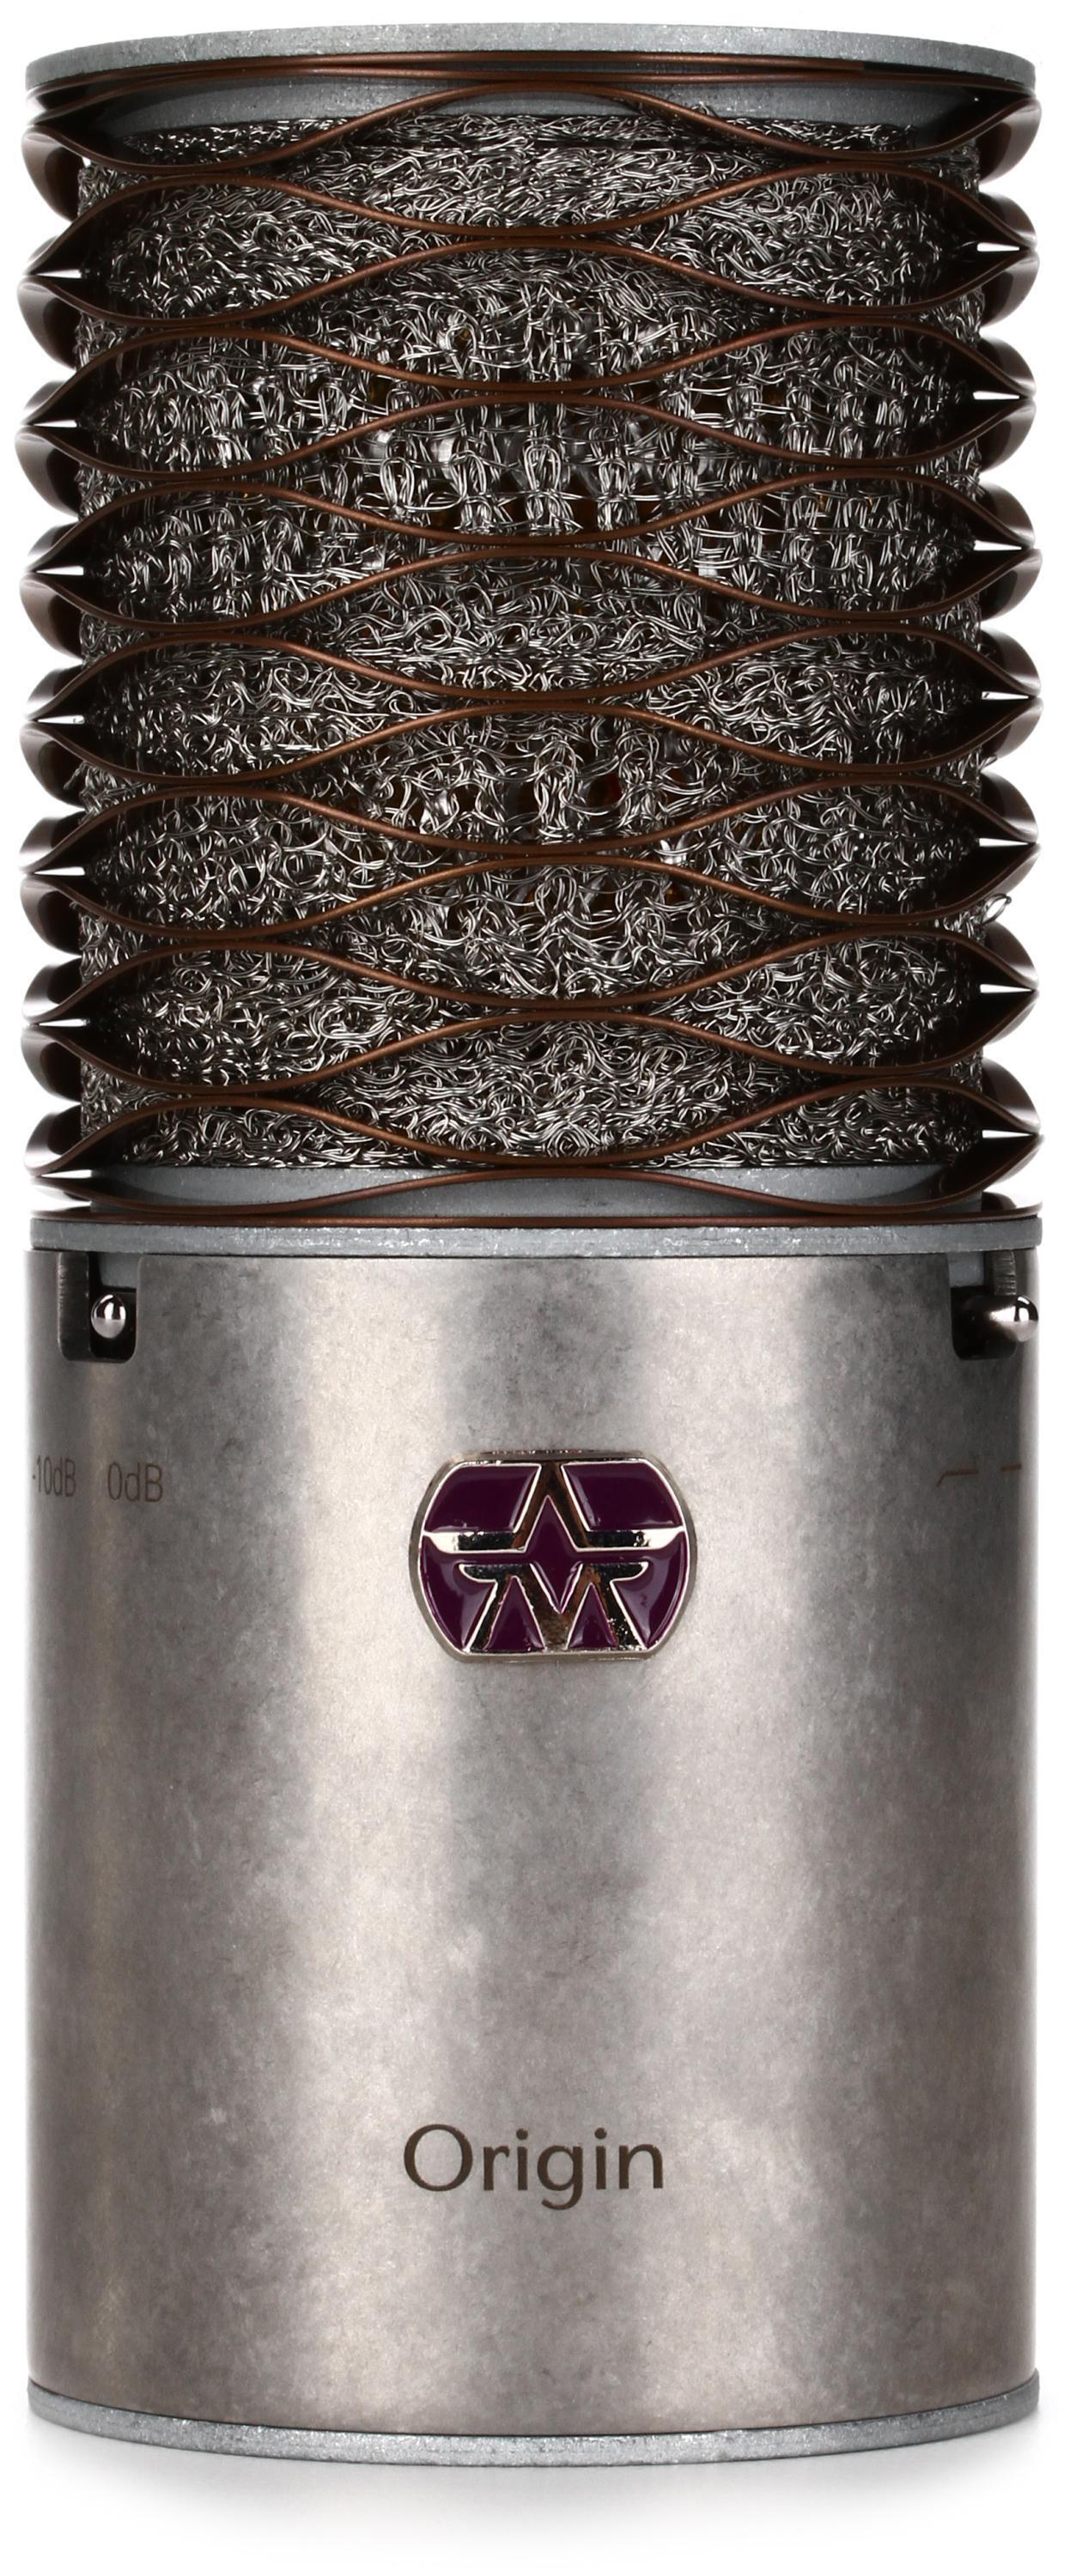 Bundled Item: Aston Microphones Origin Large-diaphragm Condenser Microphone